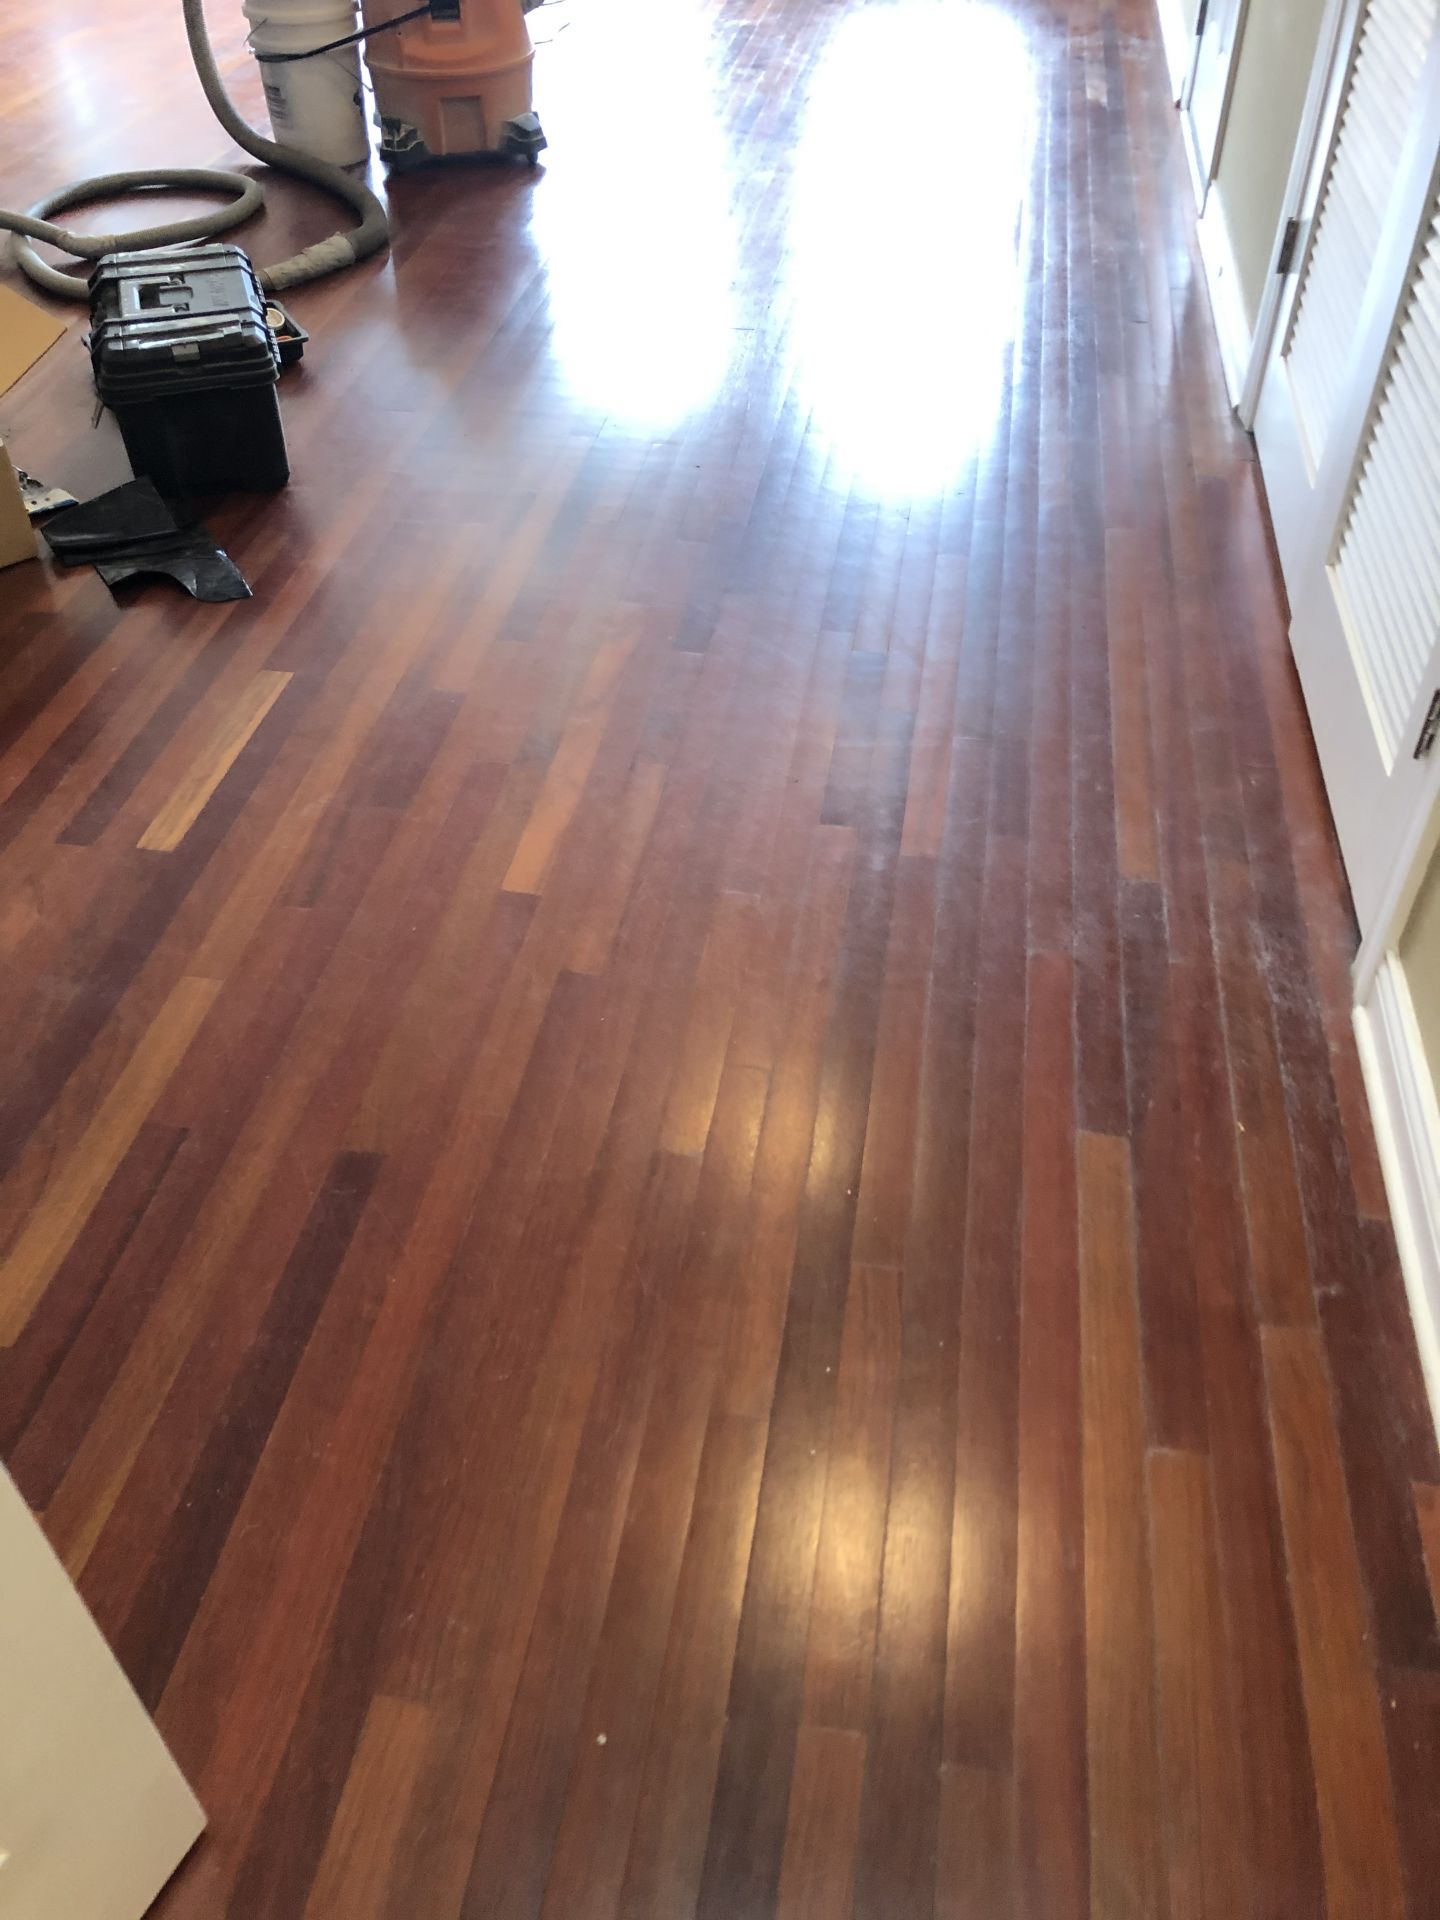 Staining Brazilian Cherry Floors, Brazilian Cherry Hardwood Floor Refinishing